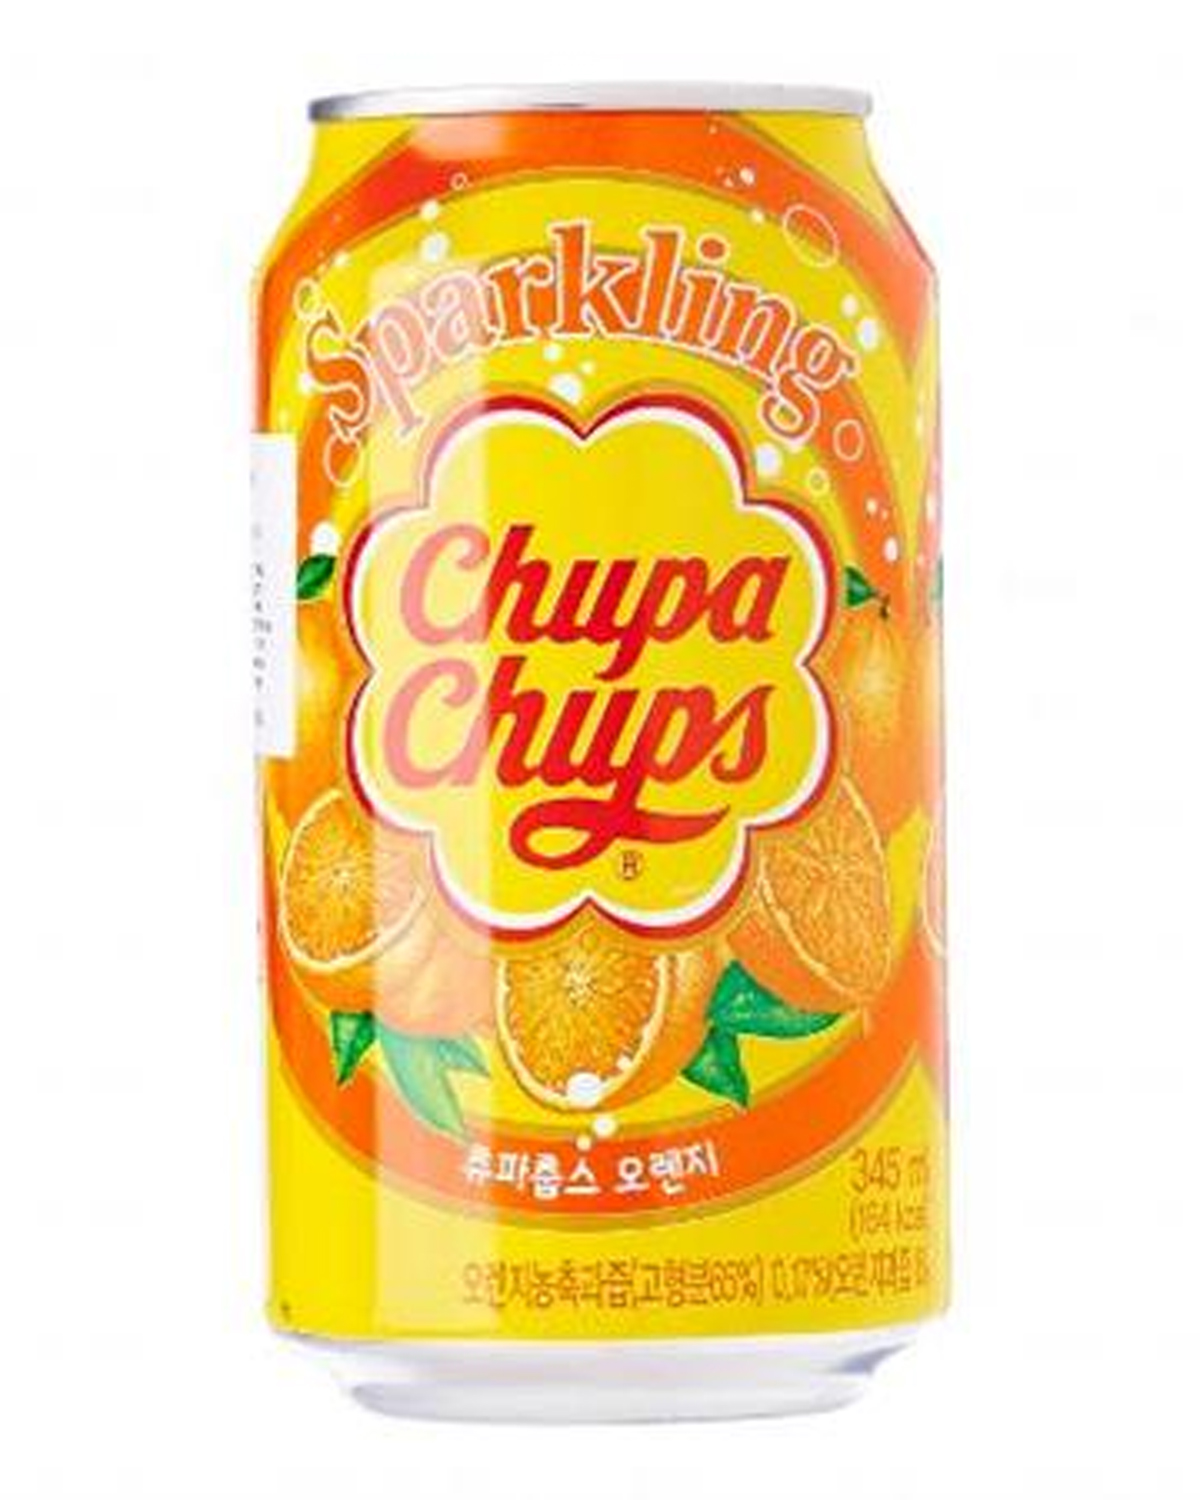 цена Напиток газированный Chupa Chups: Вкус апельсина (345мл)